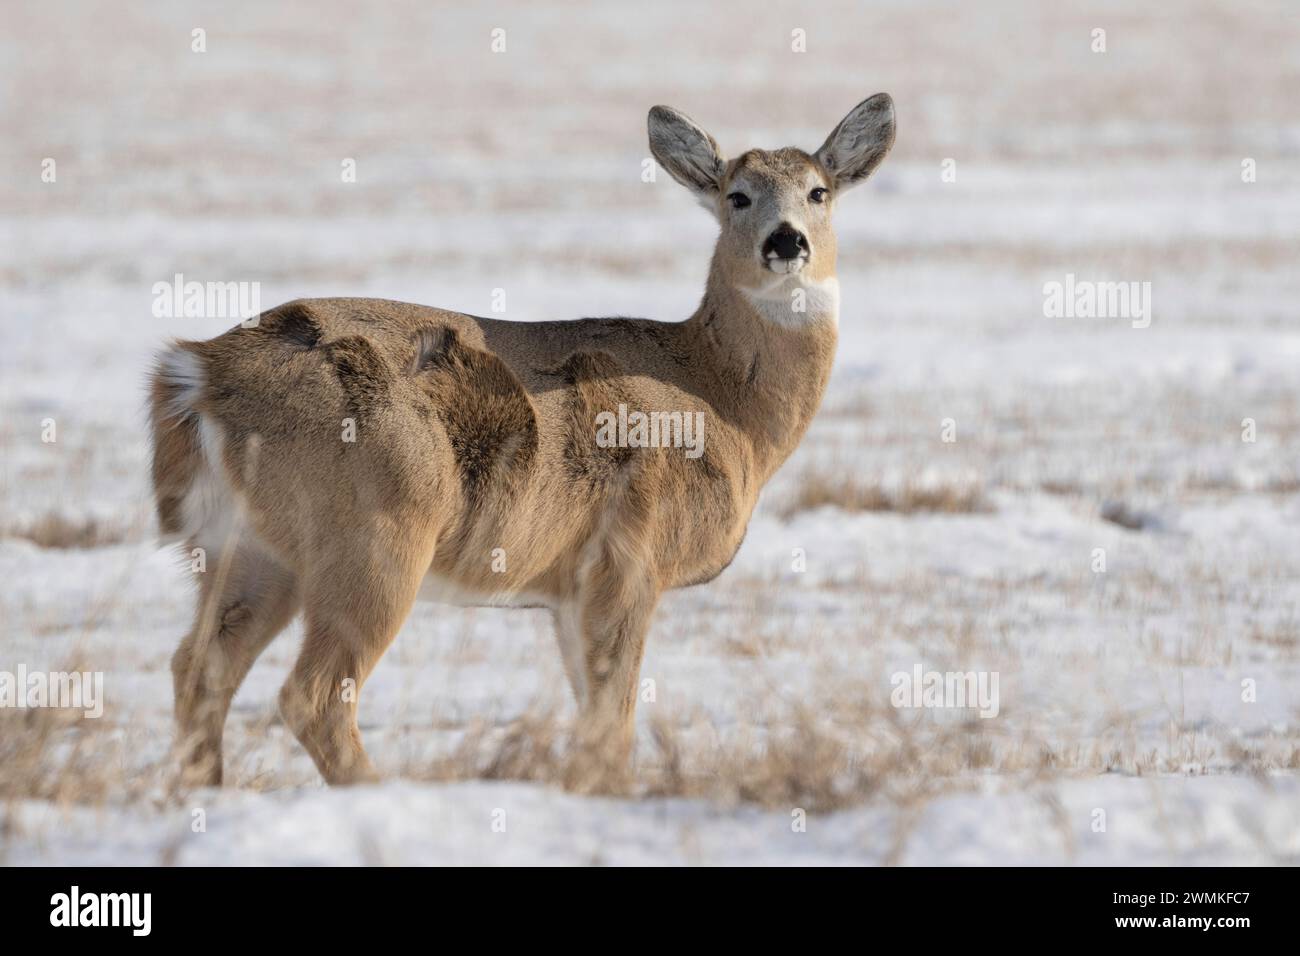 Mule deer (Odocoileus hemionus) watching the photographer on a snowy field; Val Marie, Saskatchewan, Canada Stock Photo